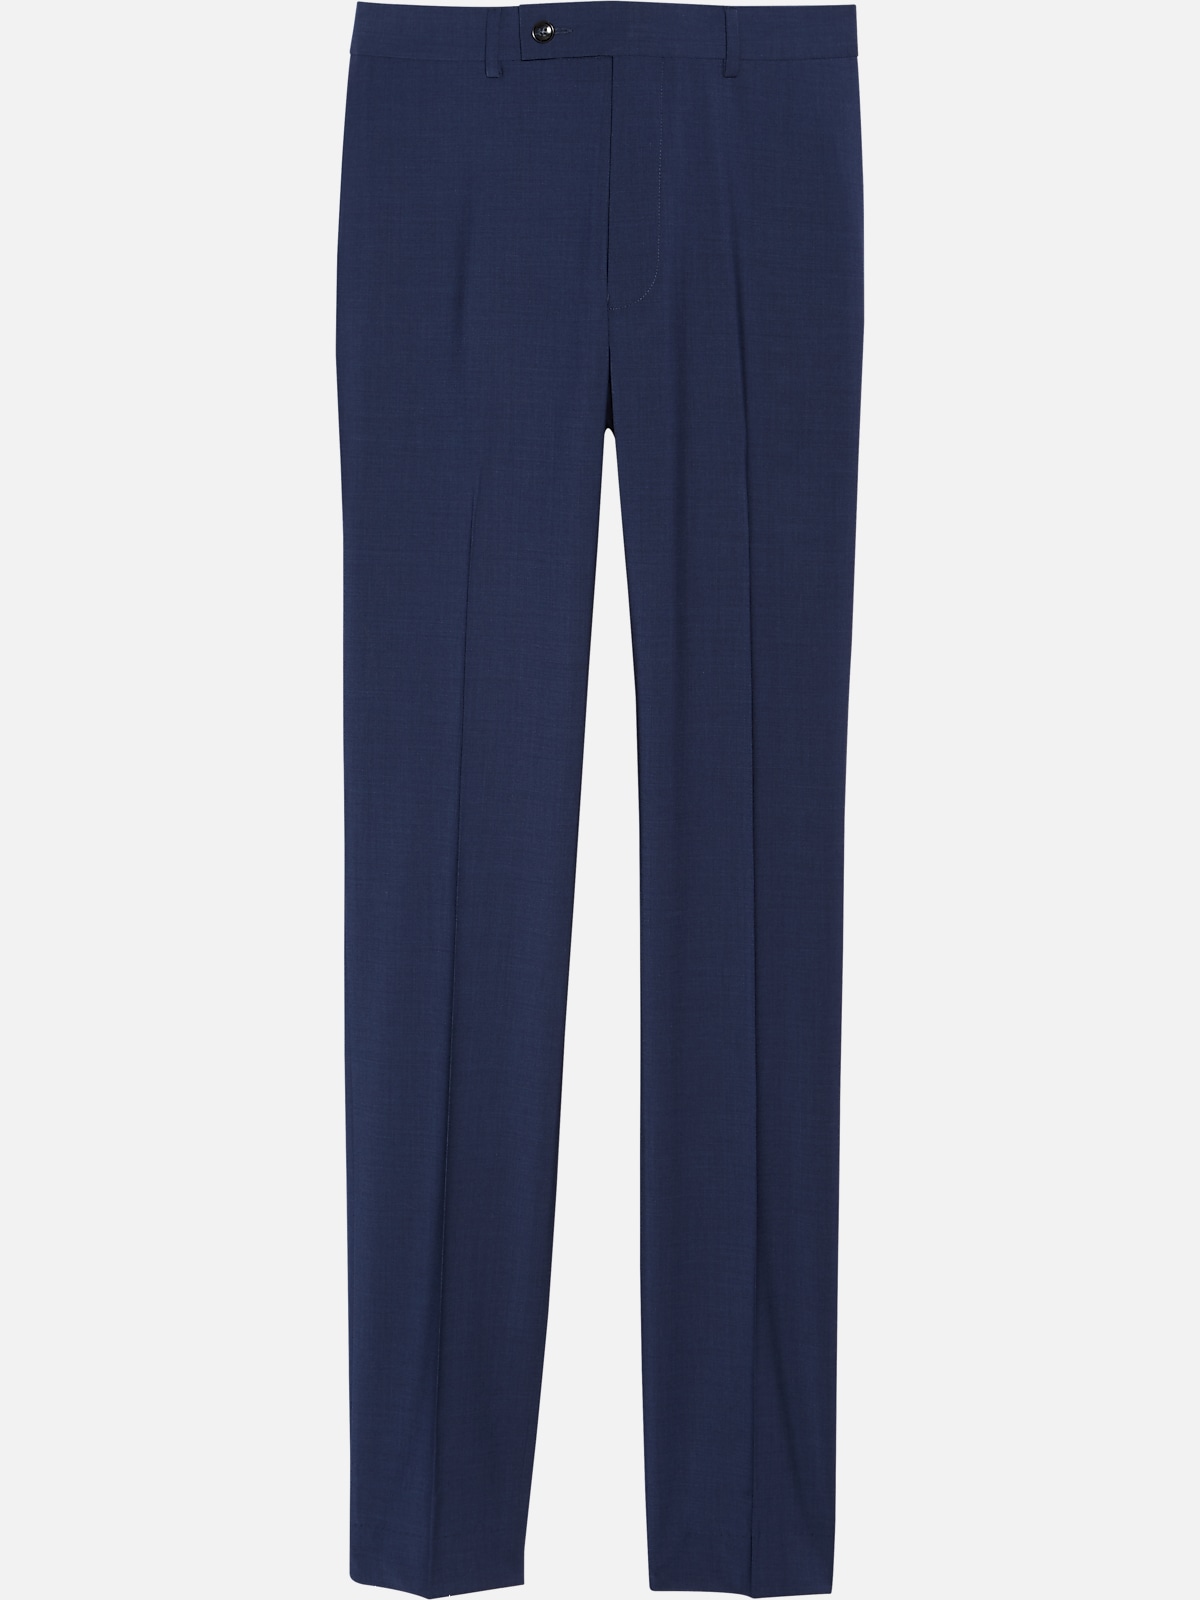 Calvin Klein Suit Separates Pants | All Clearance $39.99| Men's Wearhouse